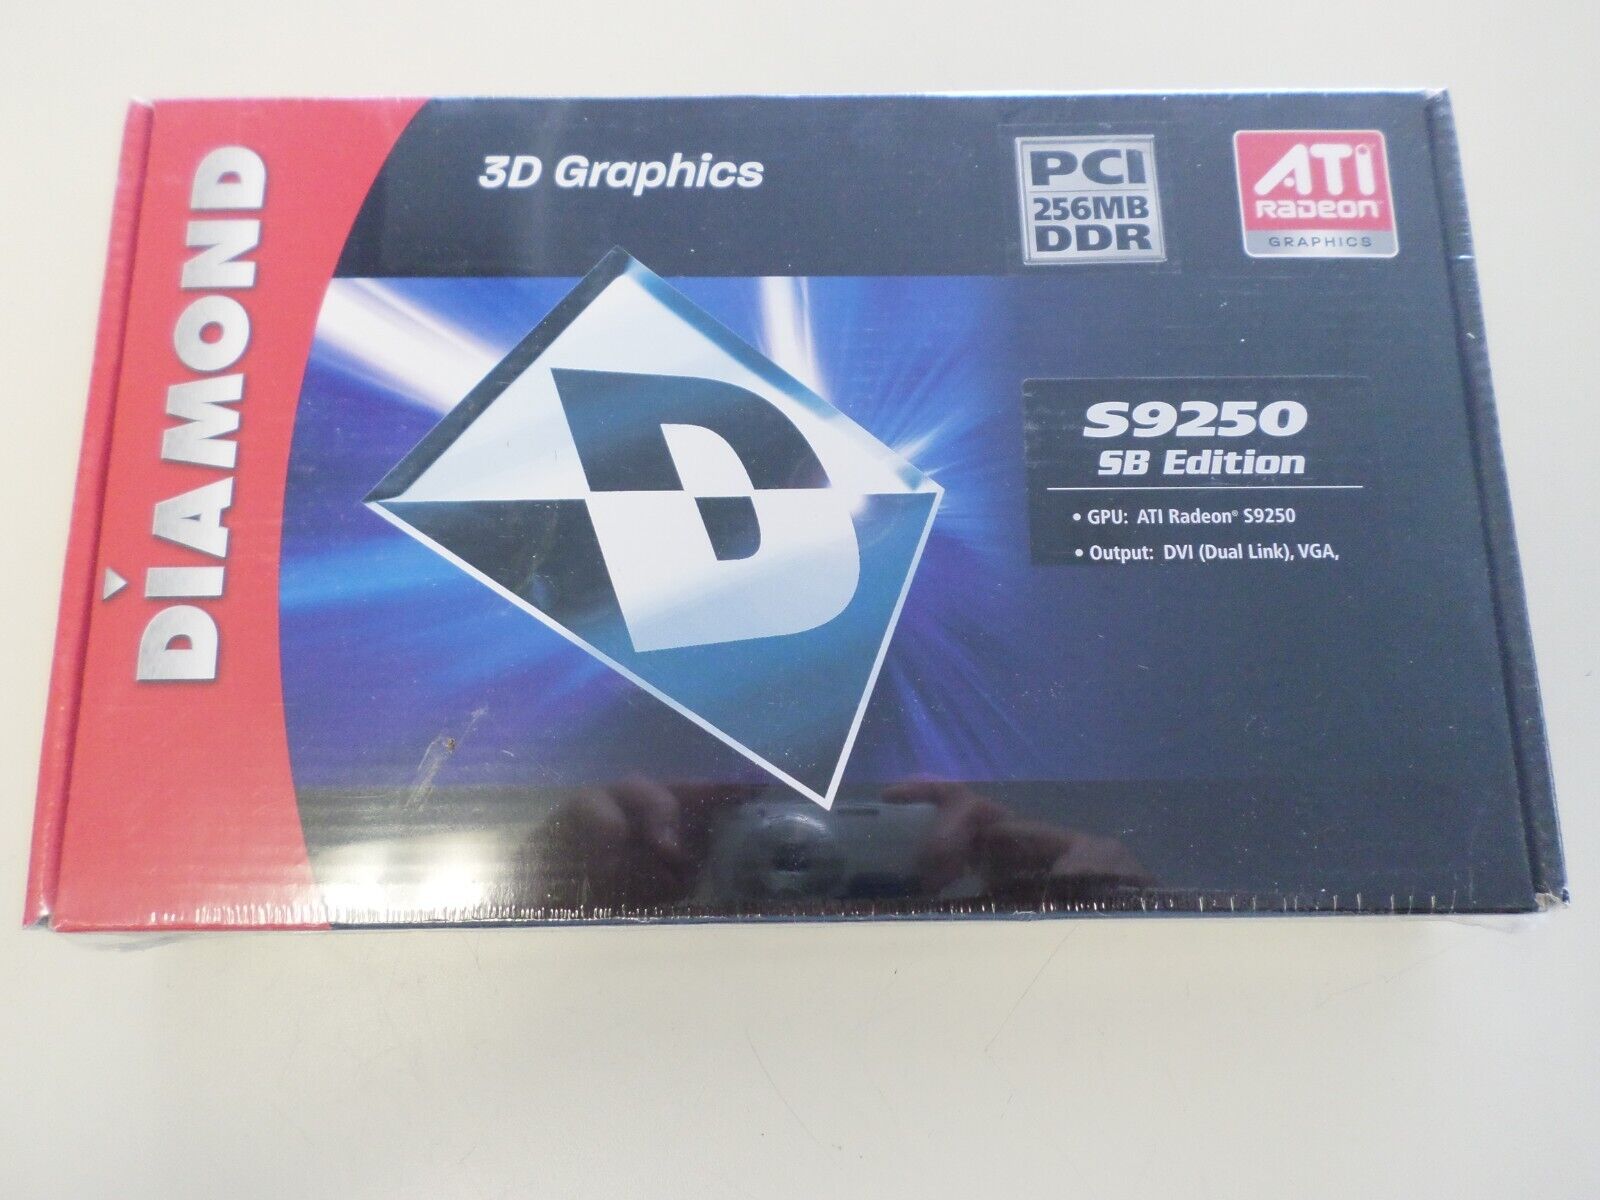 ATI RADEON DIAMOND - 9250 PCD GRAPHICS CARD - S9250 SB EDITION